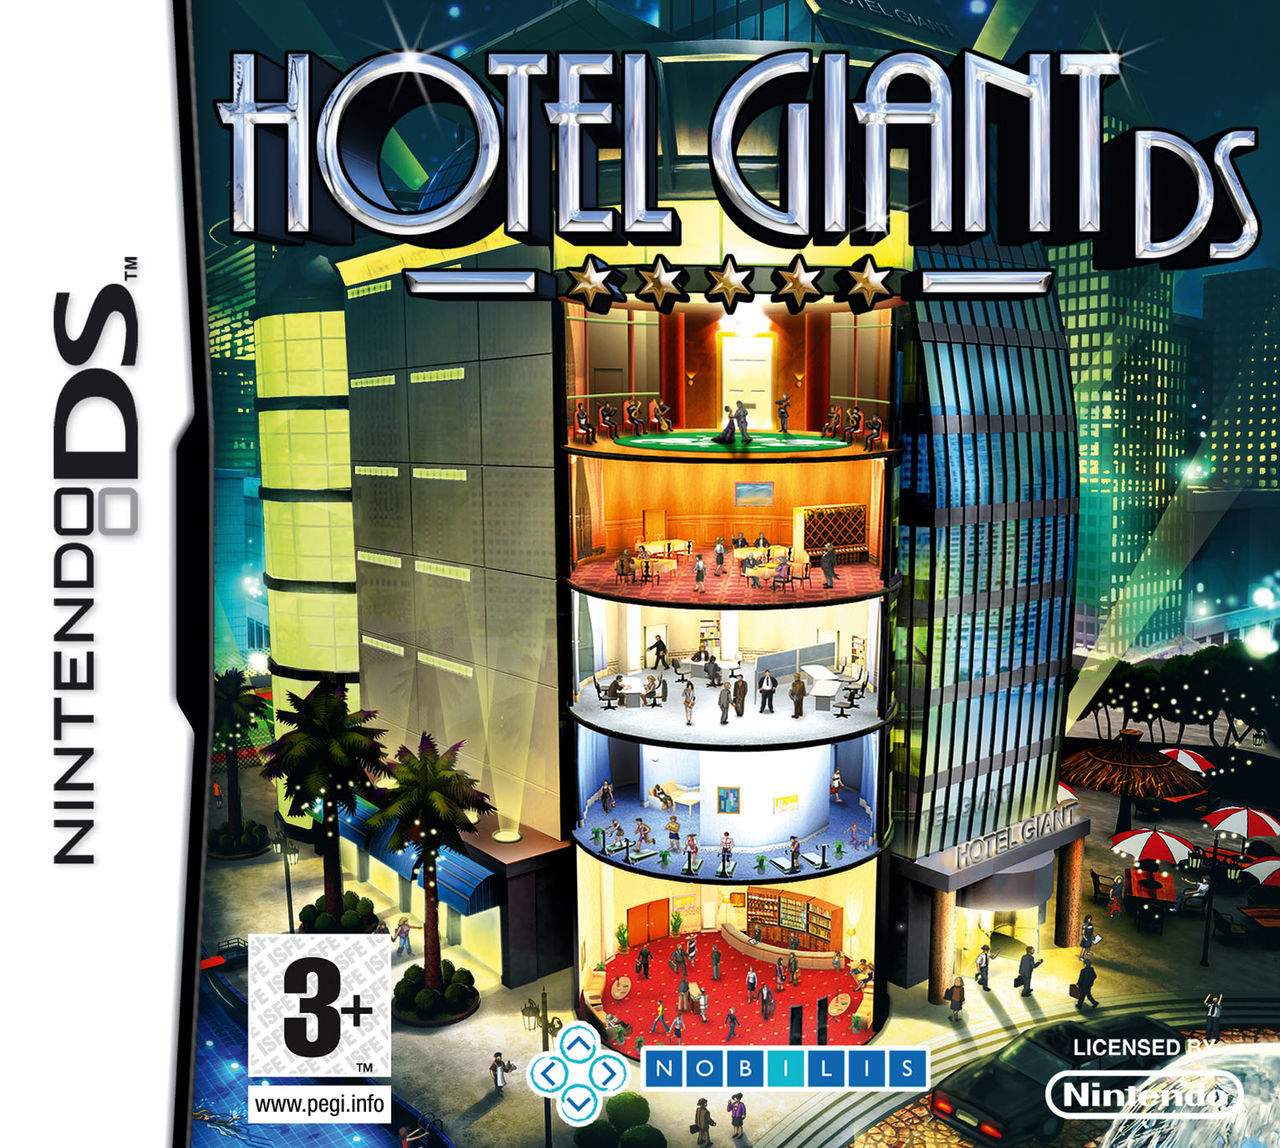 Hotel Giant Ds Videojuego Nds Vandal - juegos de hoteles en roblox